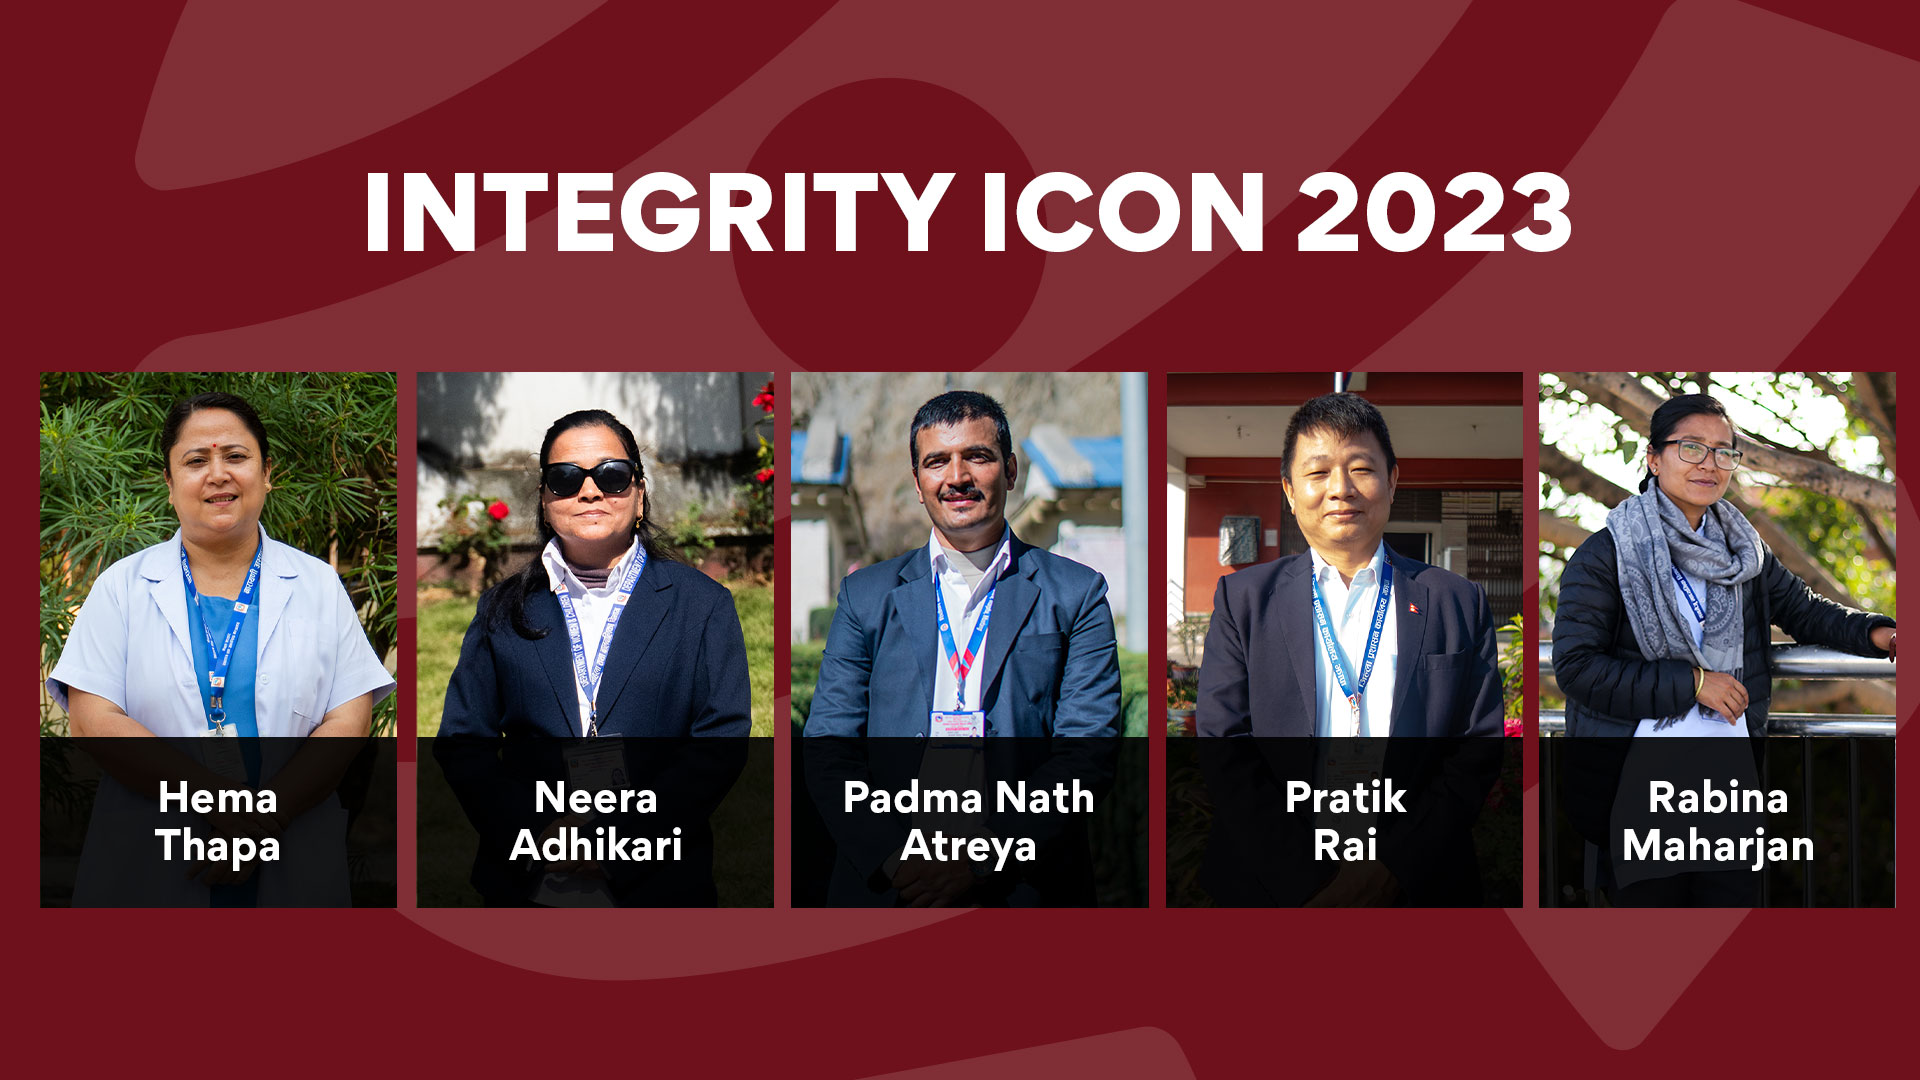 Integrity Icon 2023 revealed 